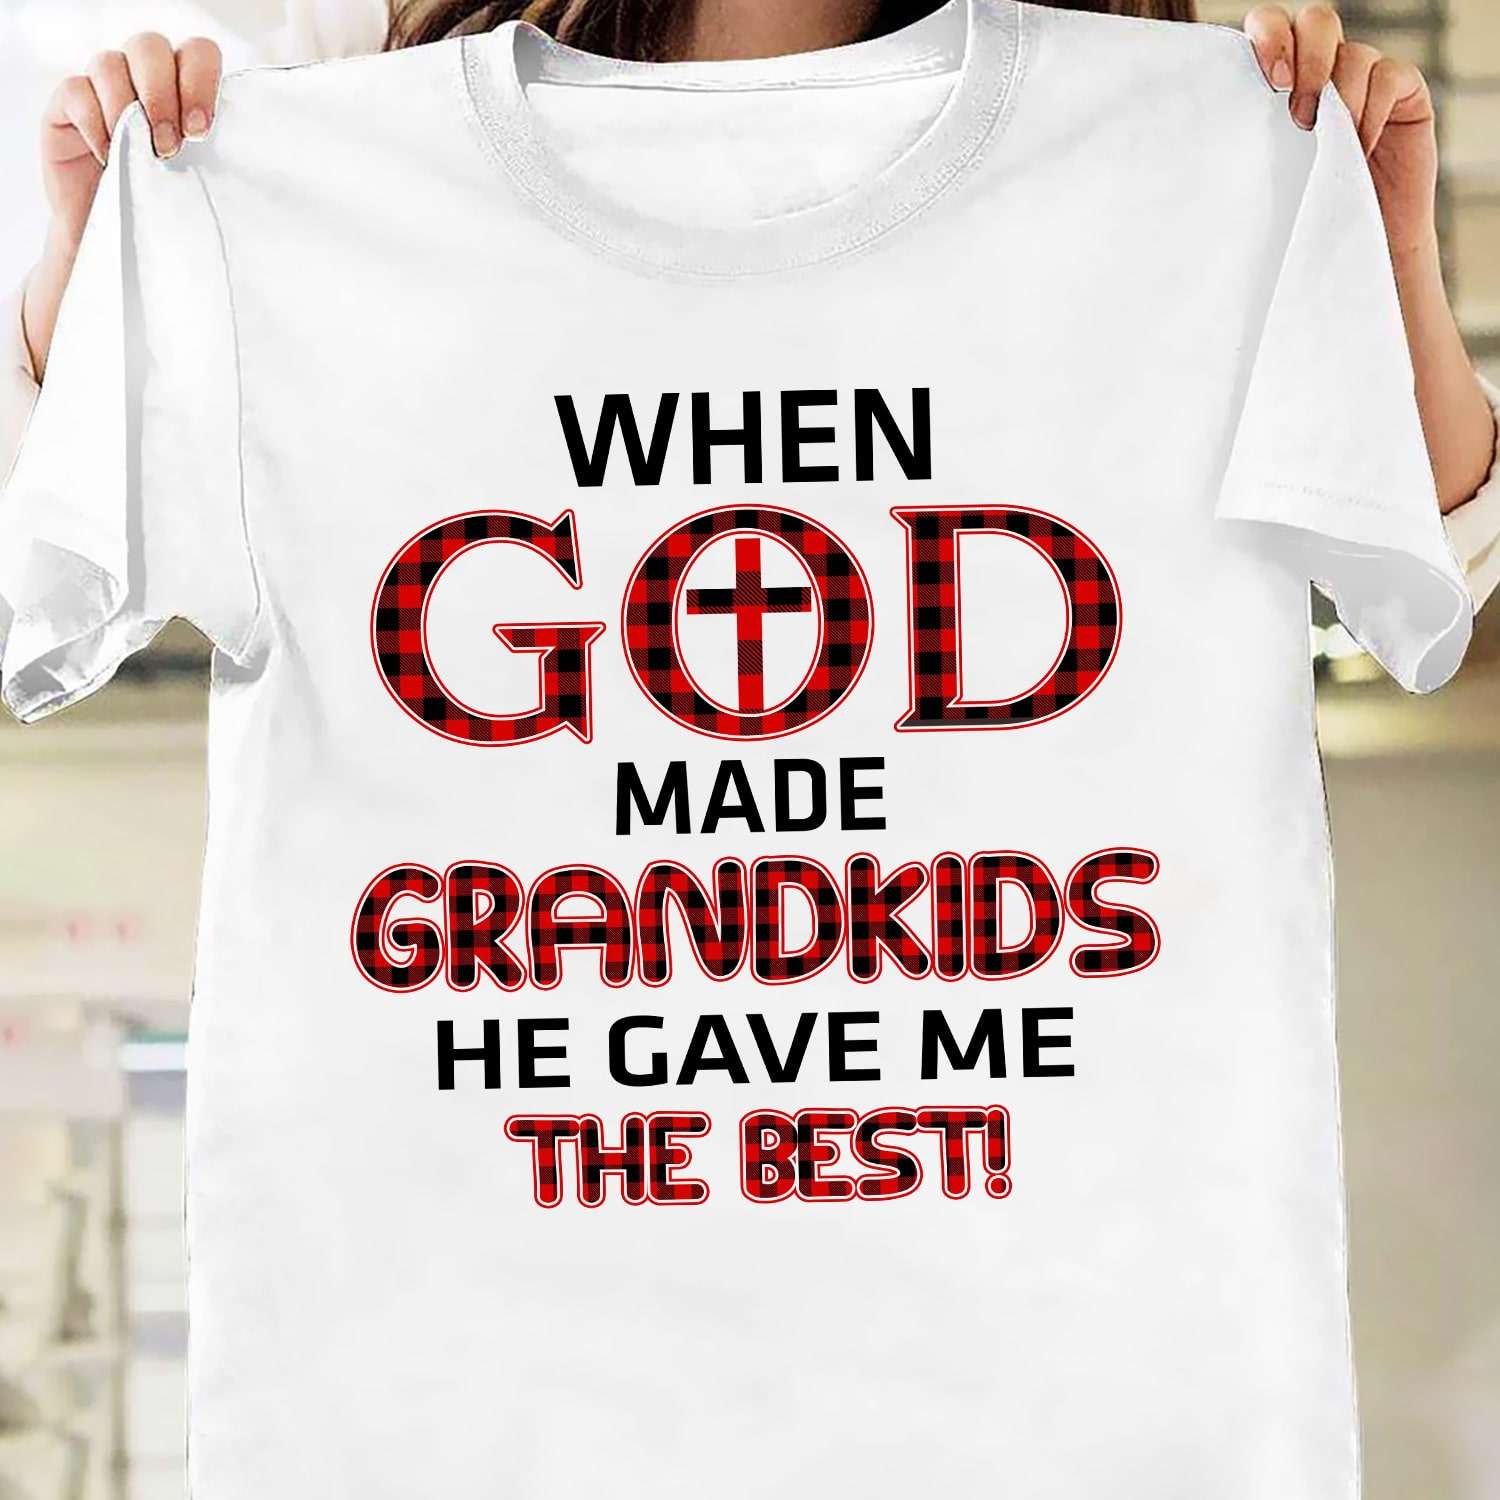 When god made grandkids he gave me the best - The best grandkids, Jesus the god